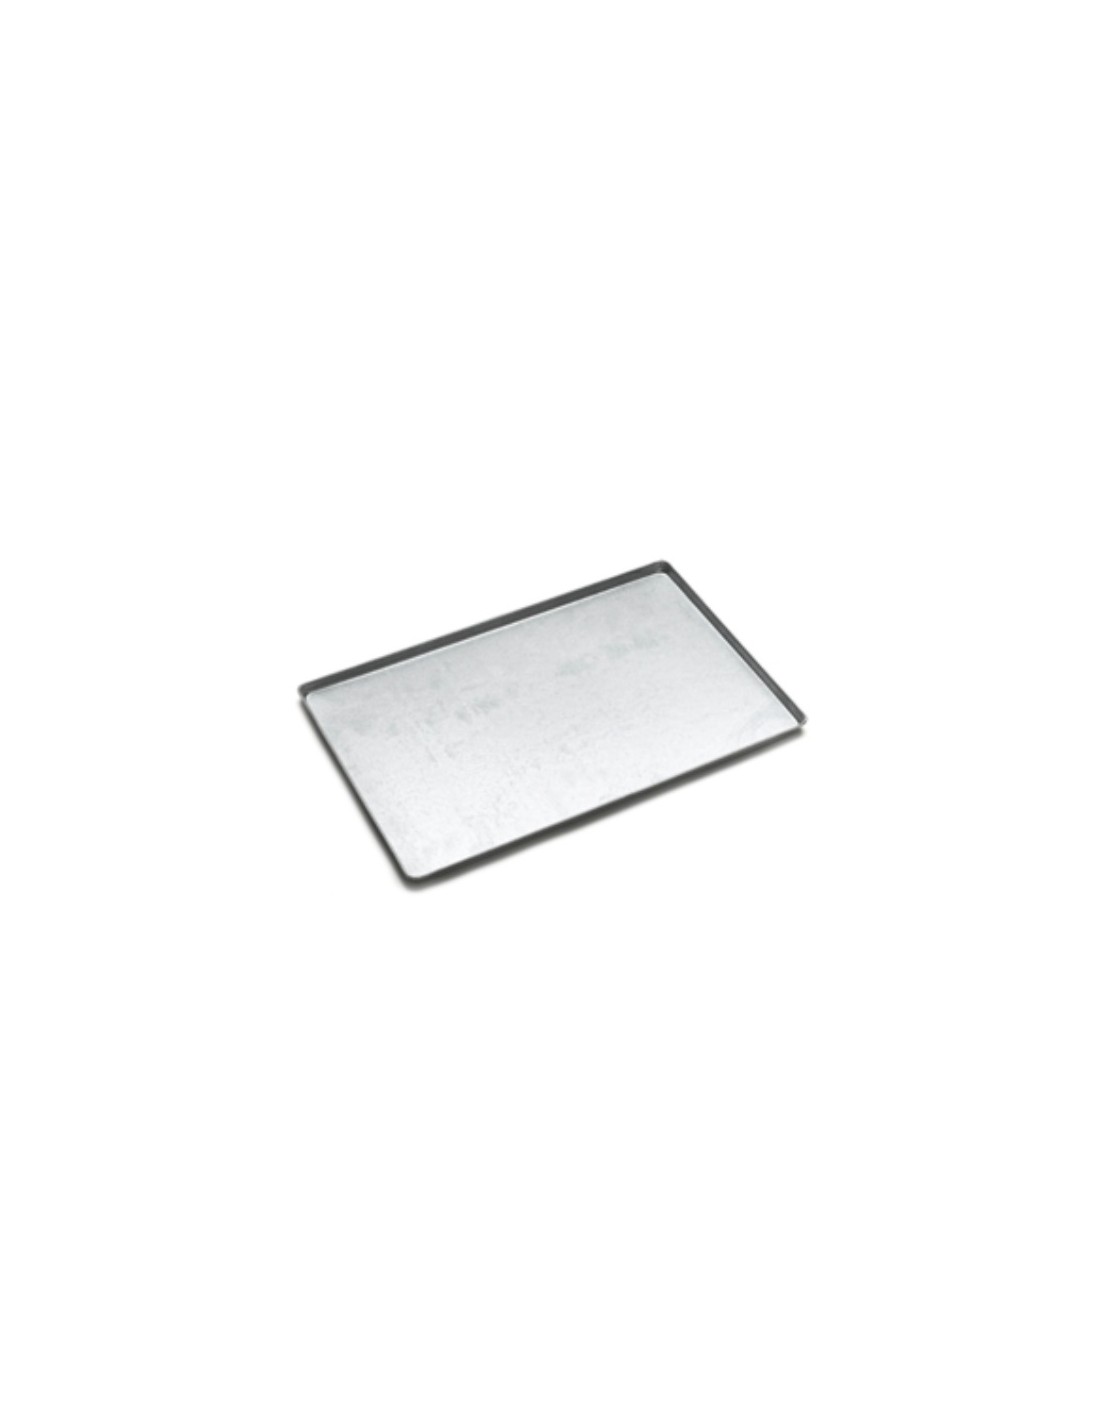 Aluminium sheet - Cm 60 x 40 - Height cm 2